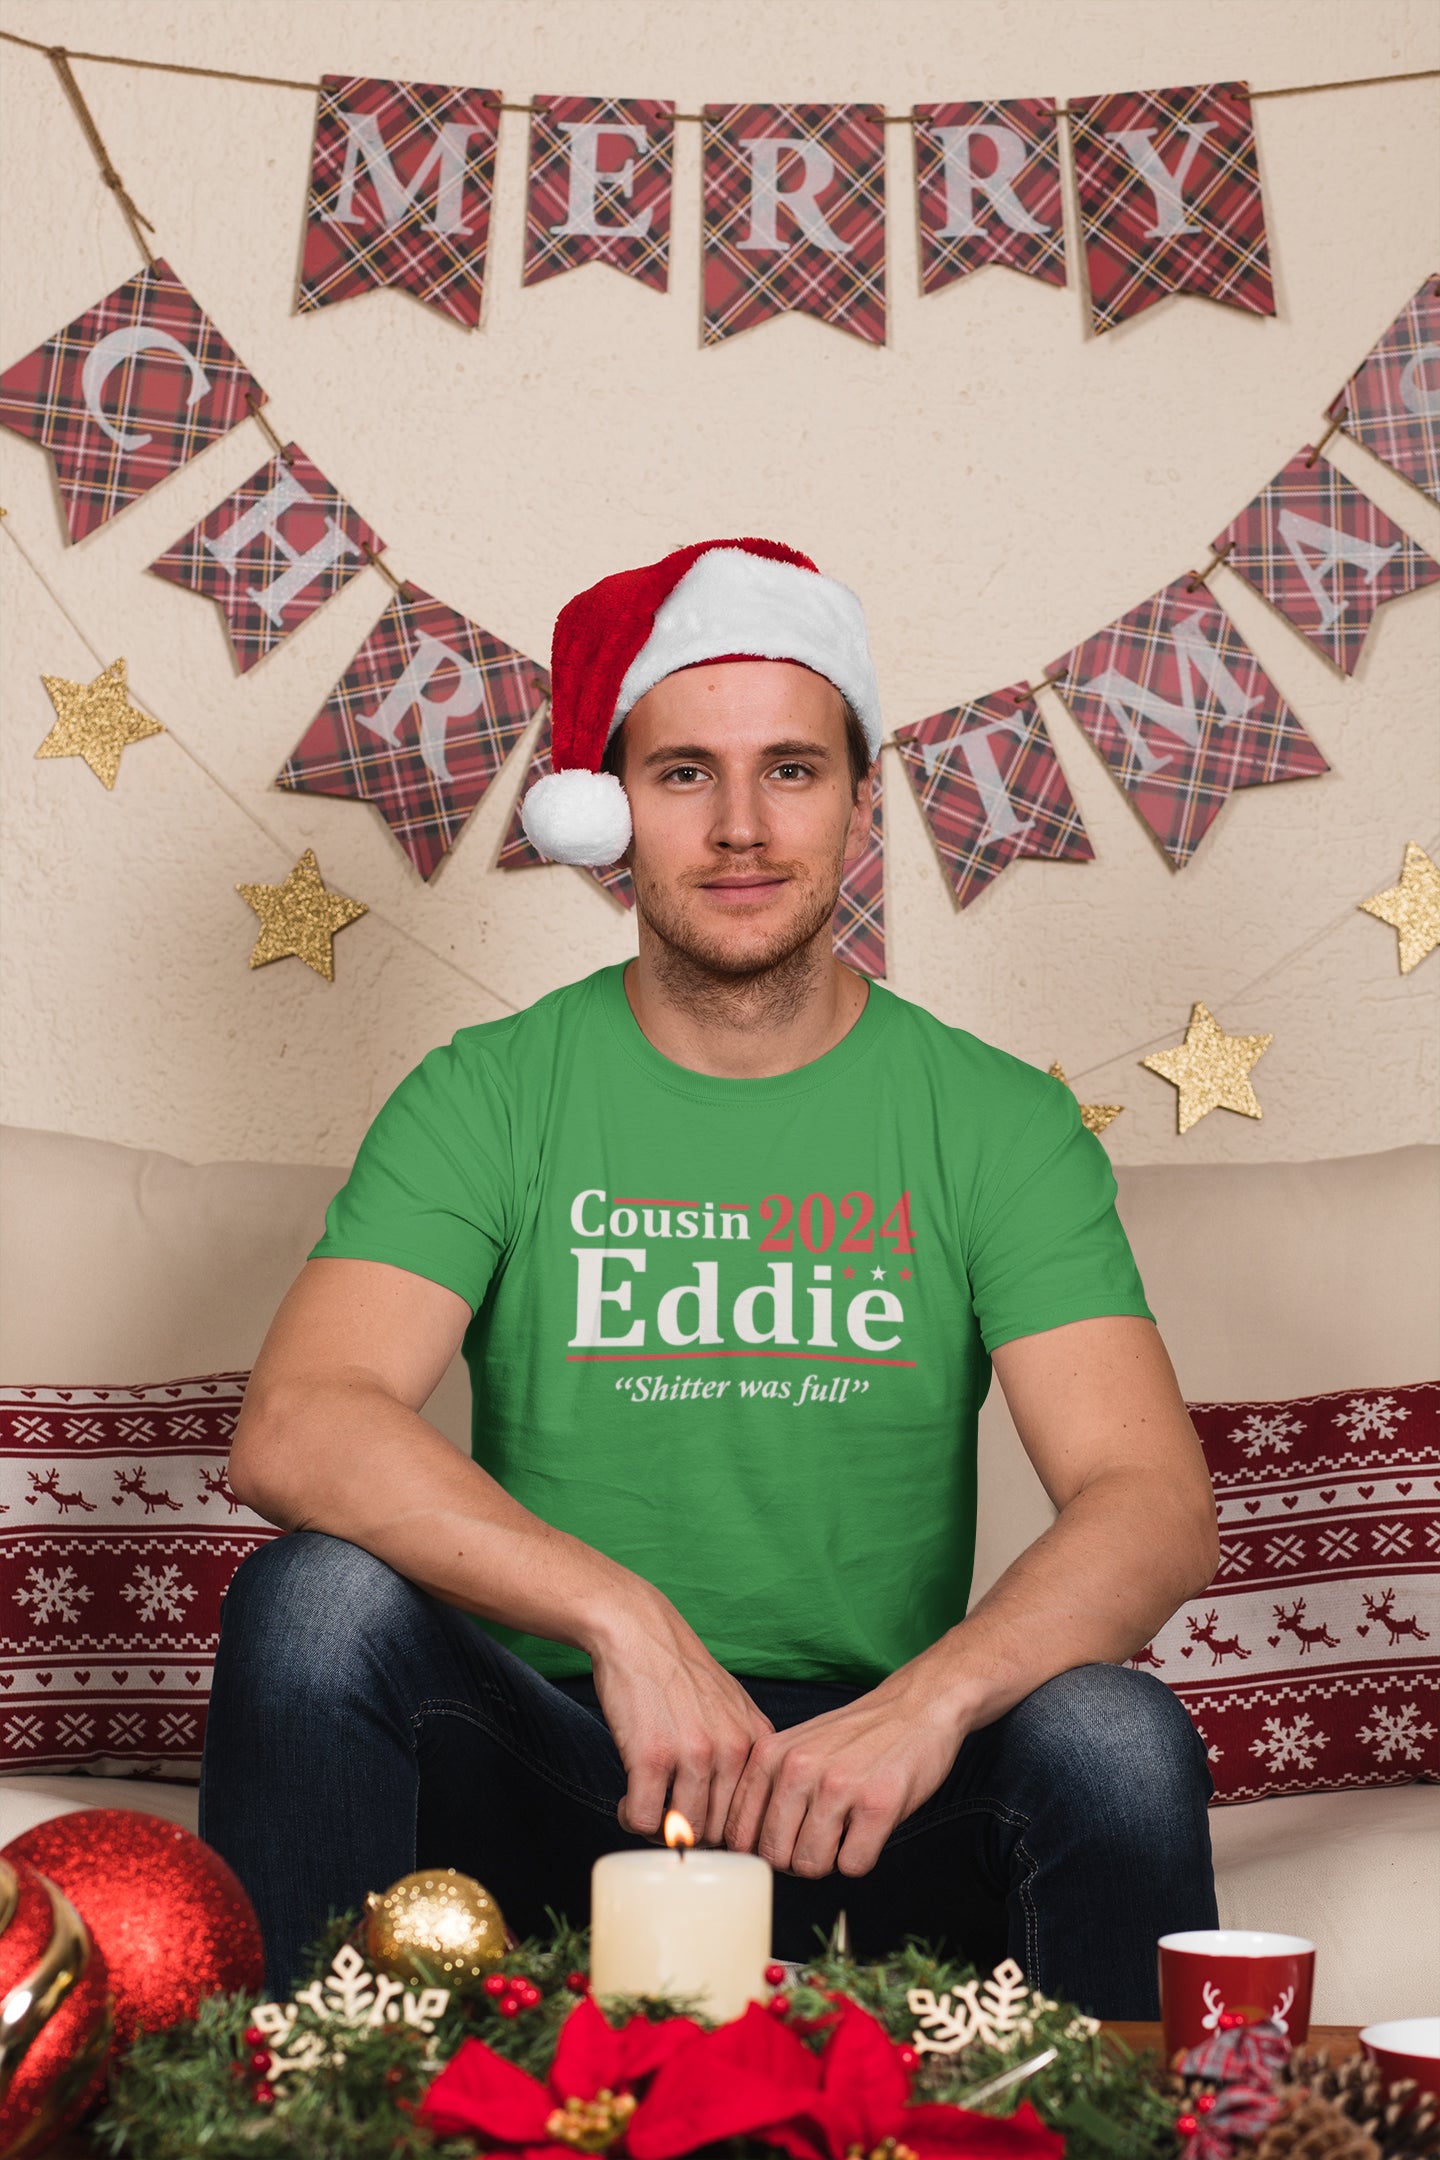 Cousin Eddie 2024 Election Tshirt - Donkey Tees